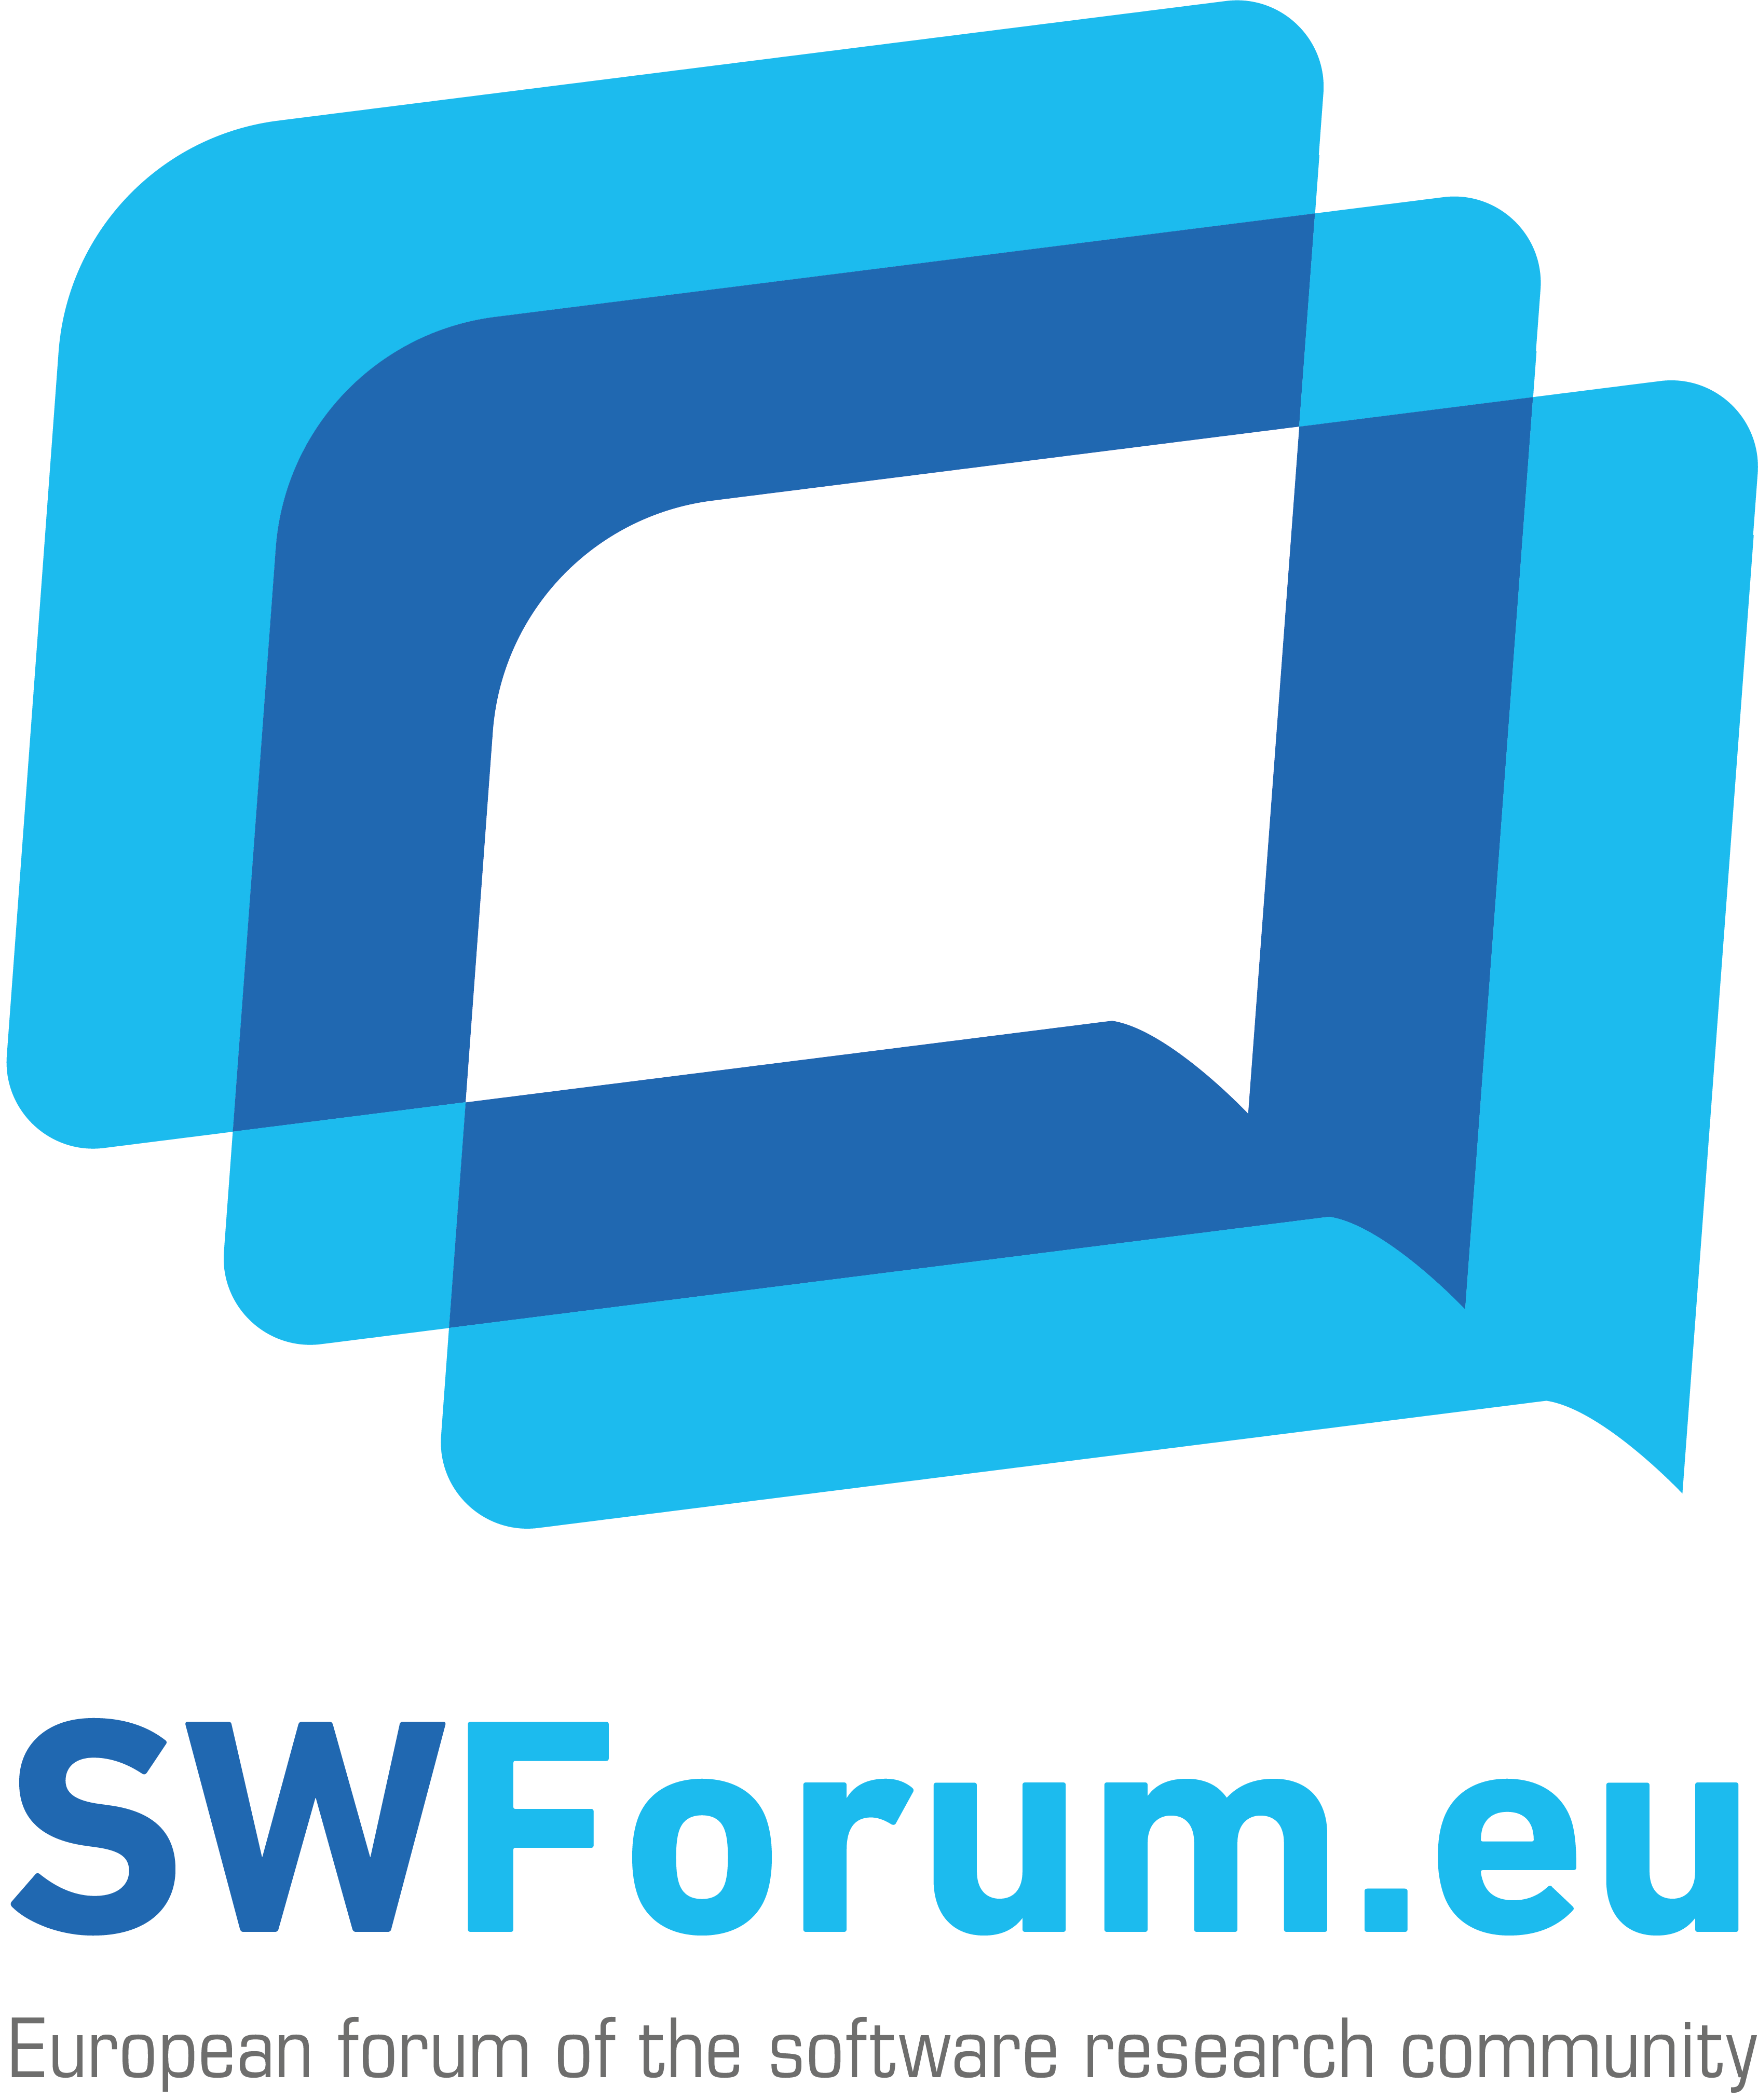 SWForum.eu